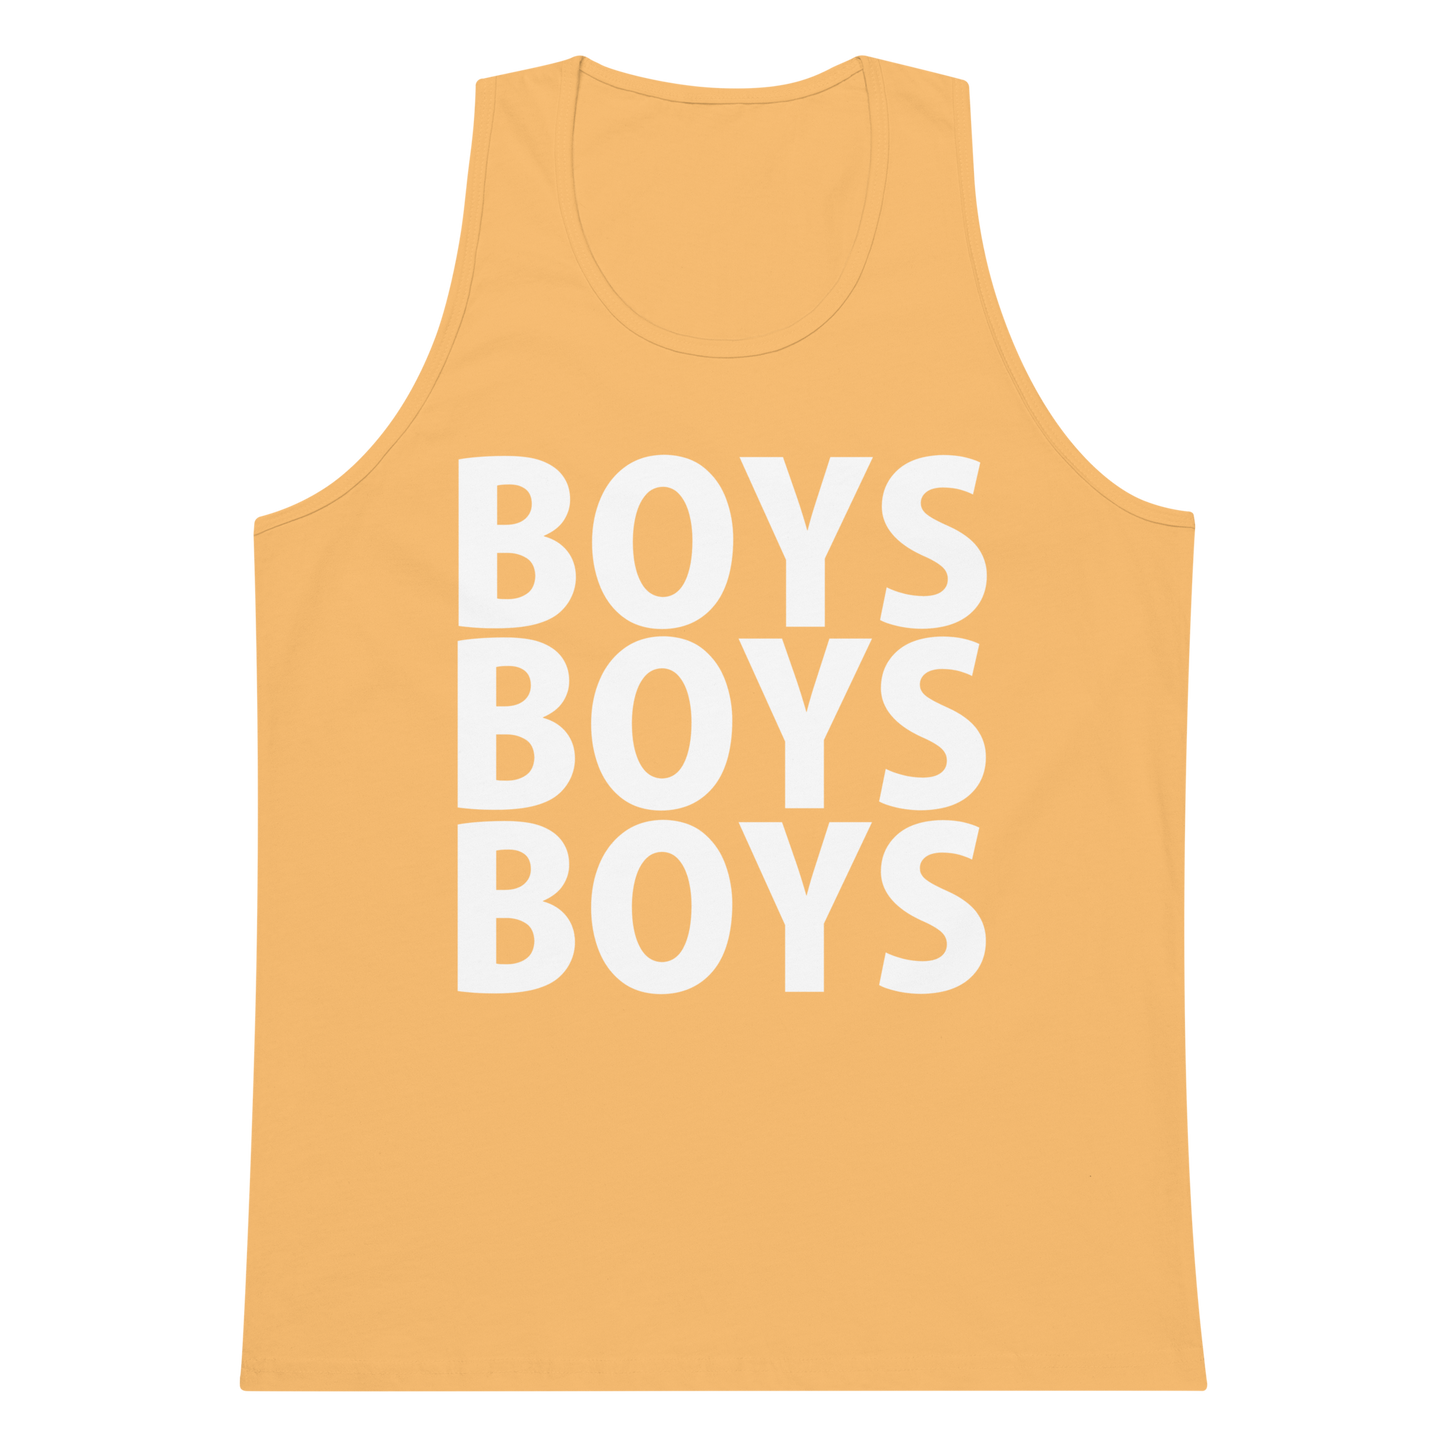 Boys Boys Boys Tank Top - Squash